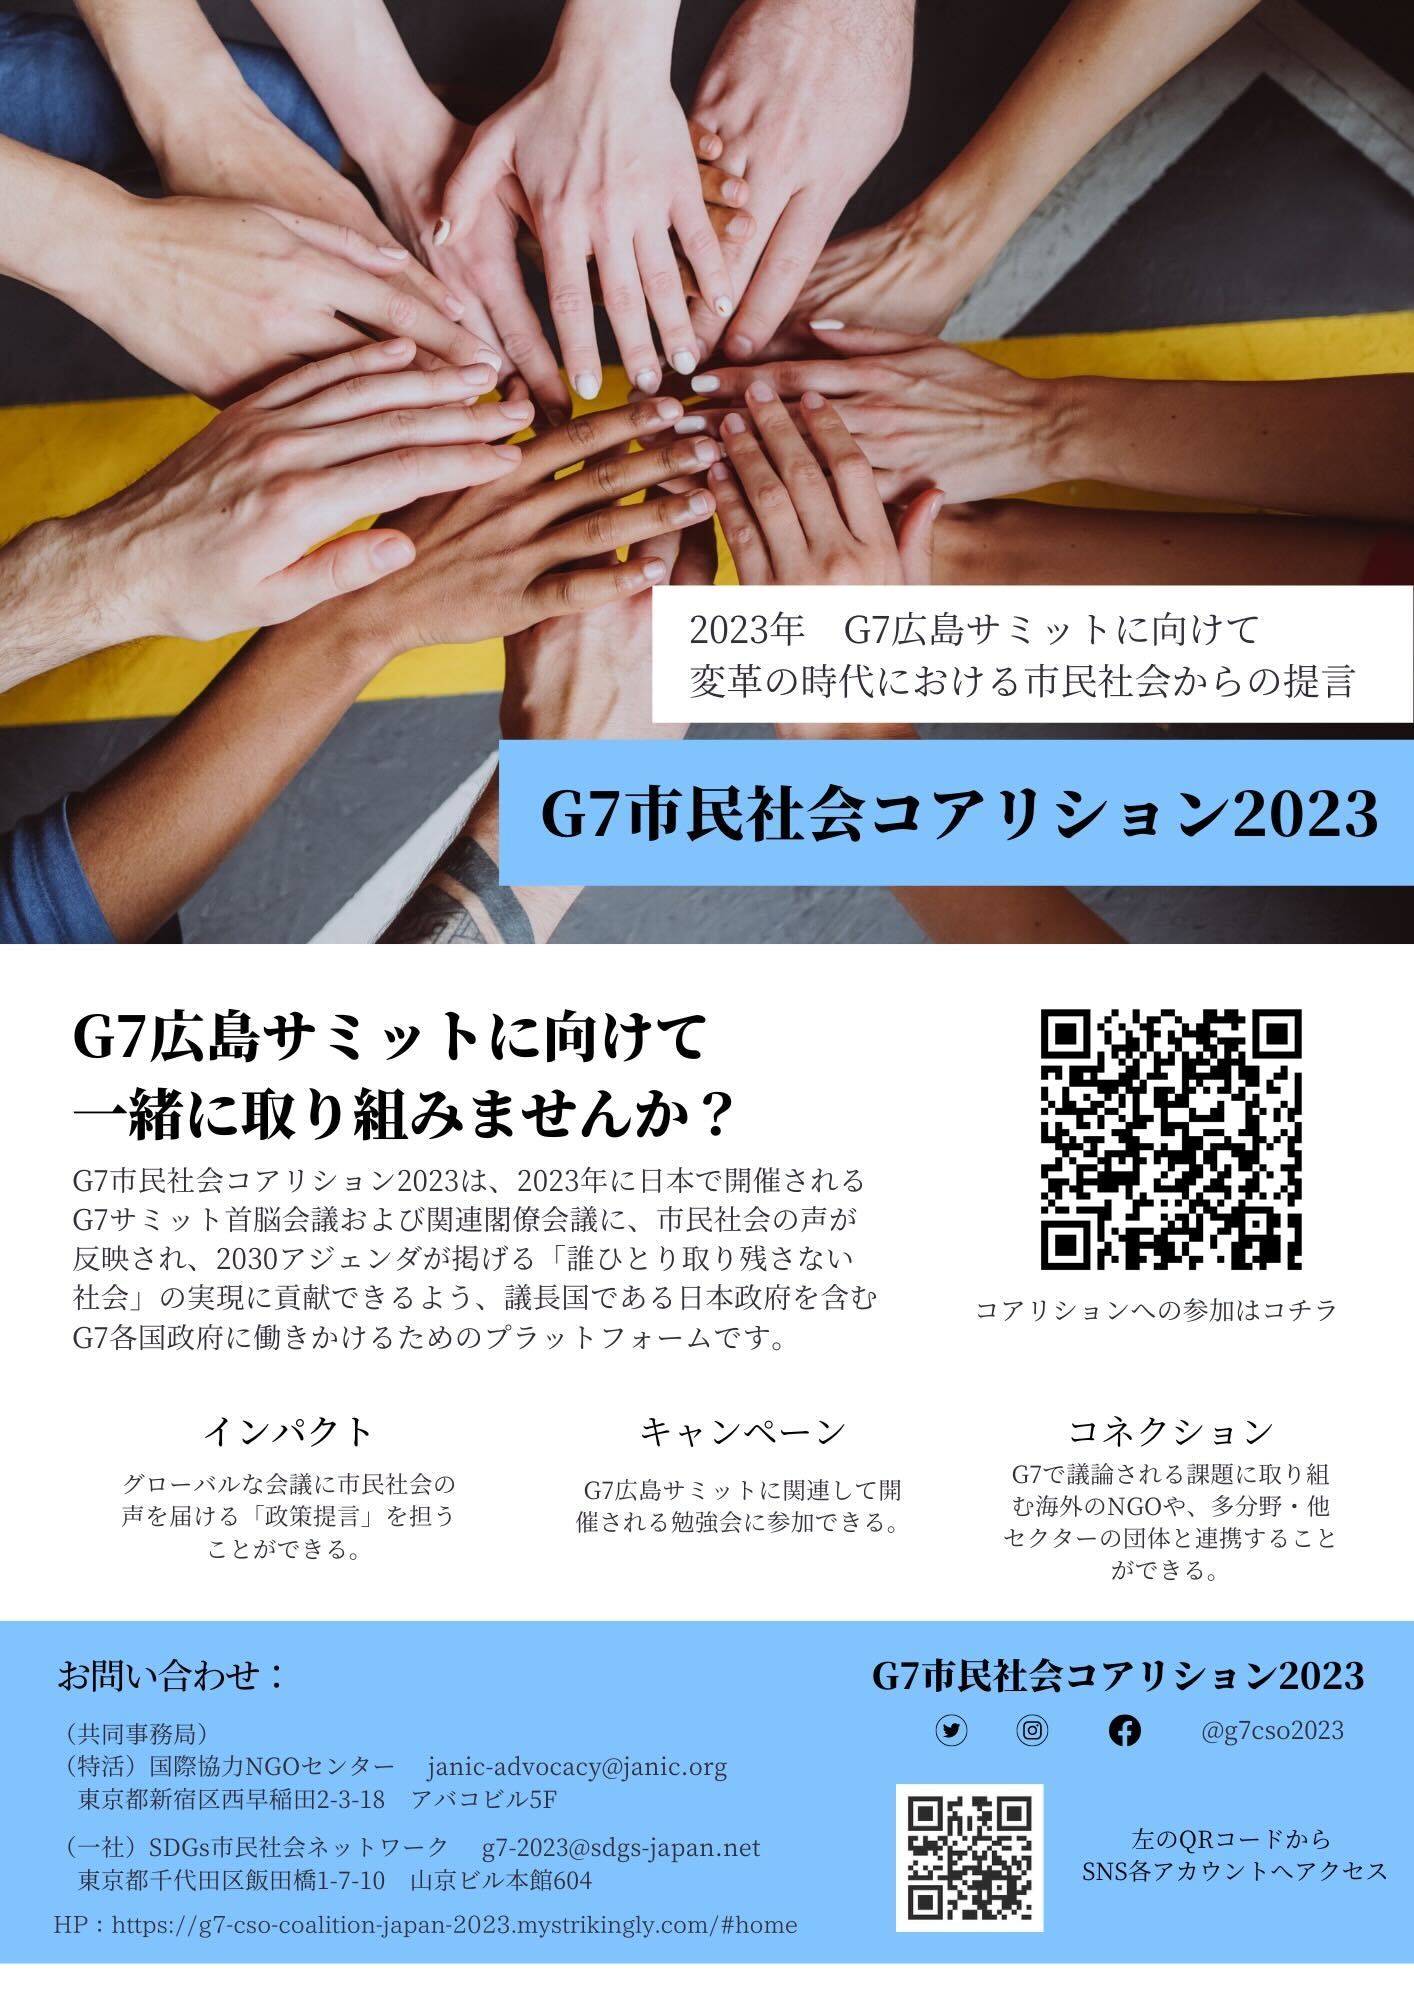 G7市民社会コアリション2023のご紹介と会員登録、SNS登録のお願い